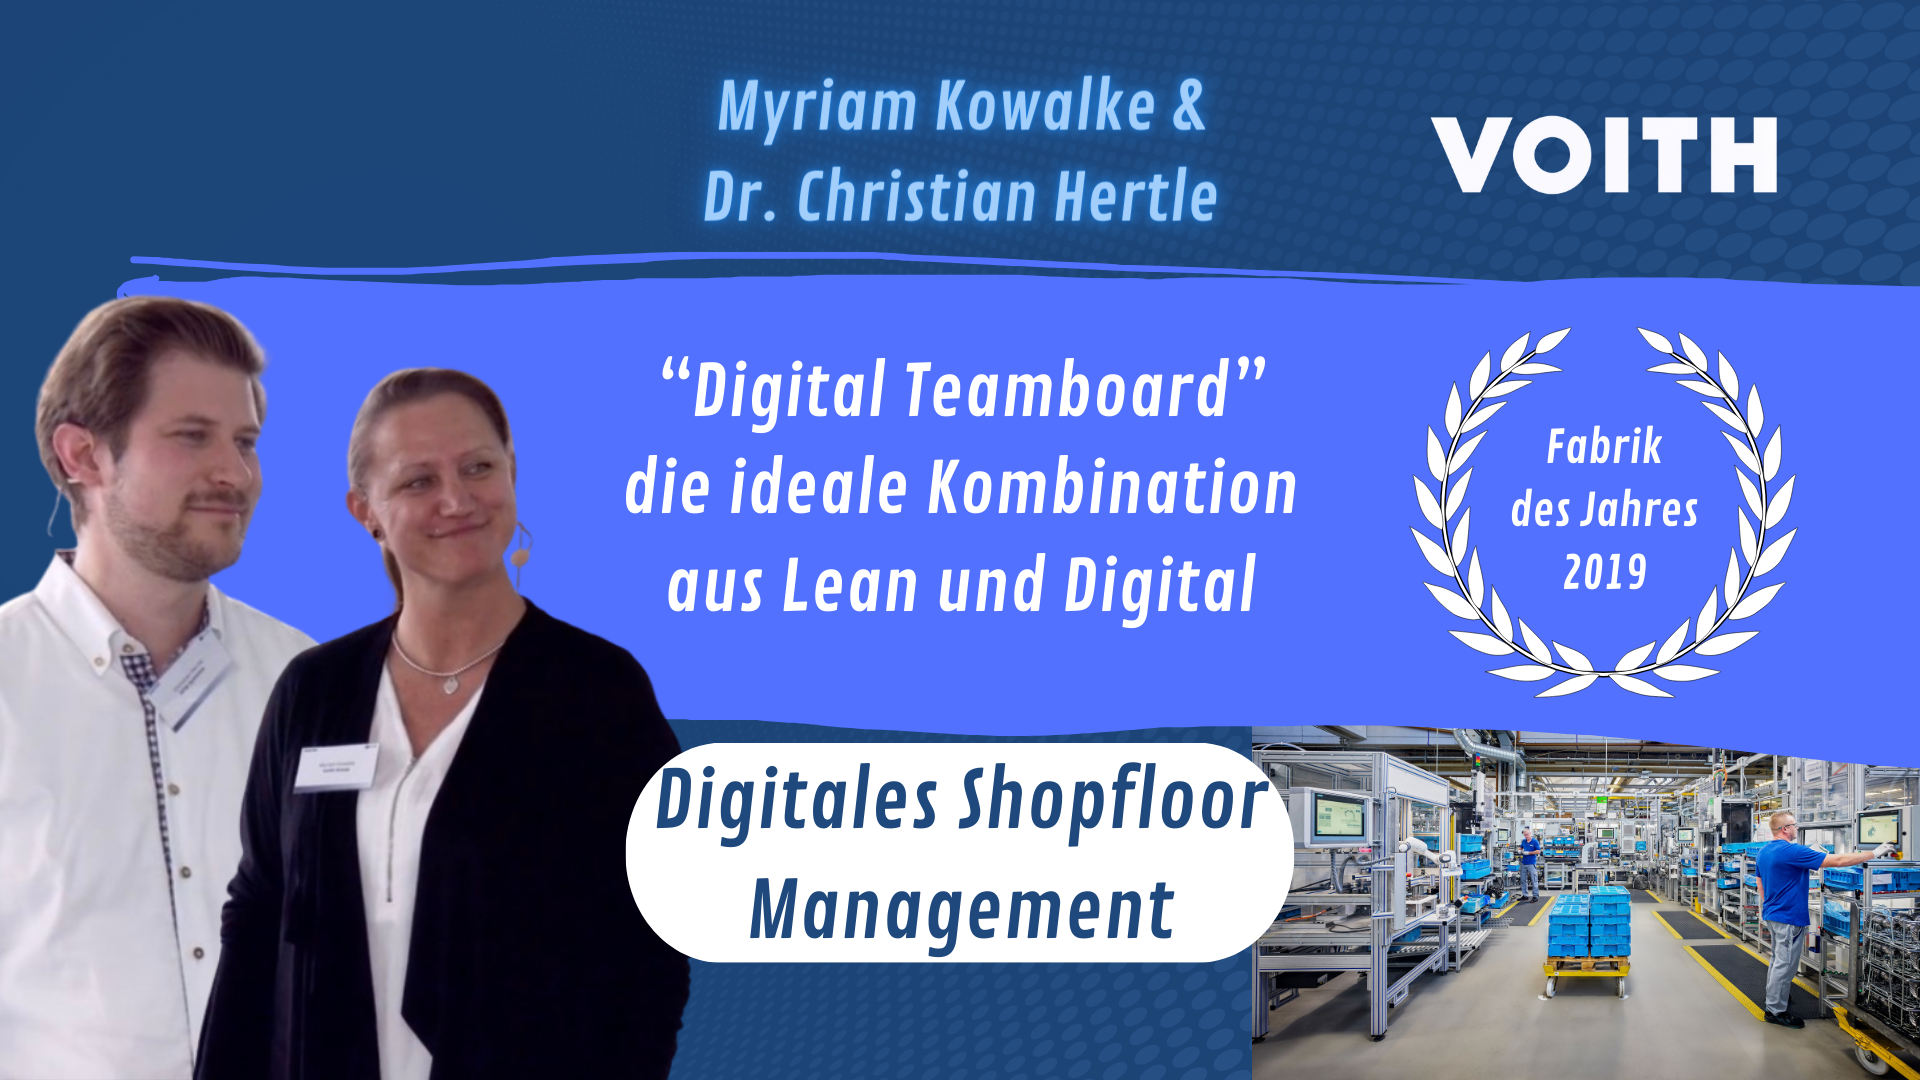 DIGITAL - Digital Shopfloor Management with Myriam Kowalke & Dr. Christian Hertle